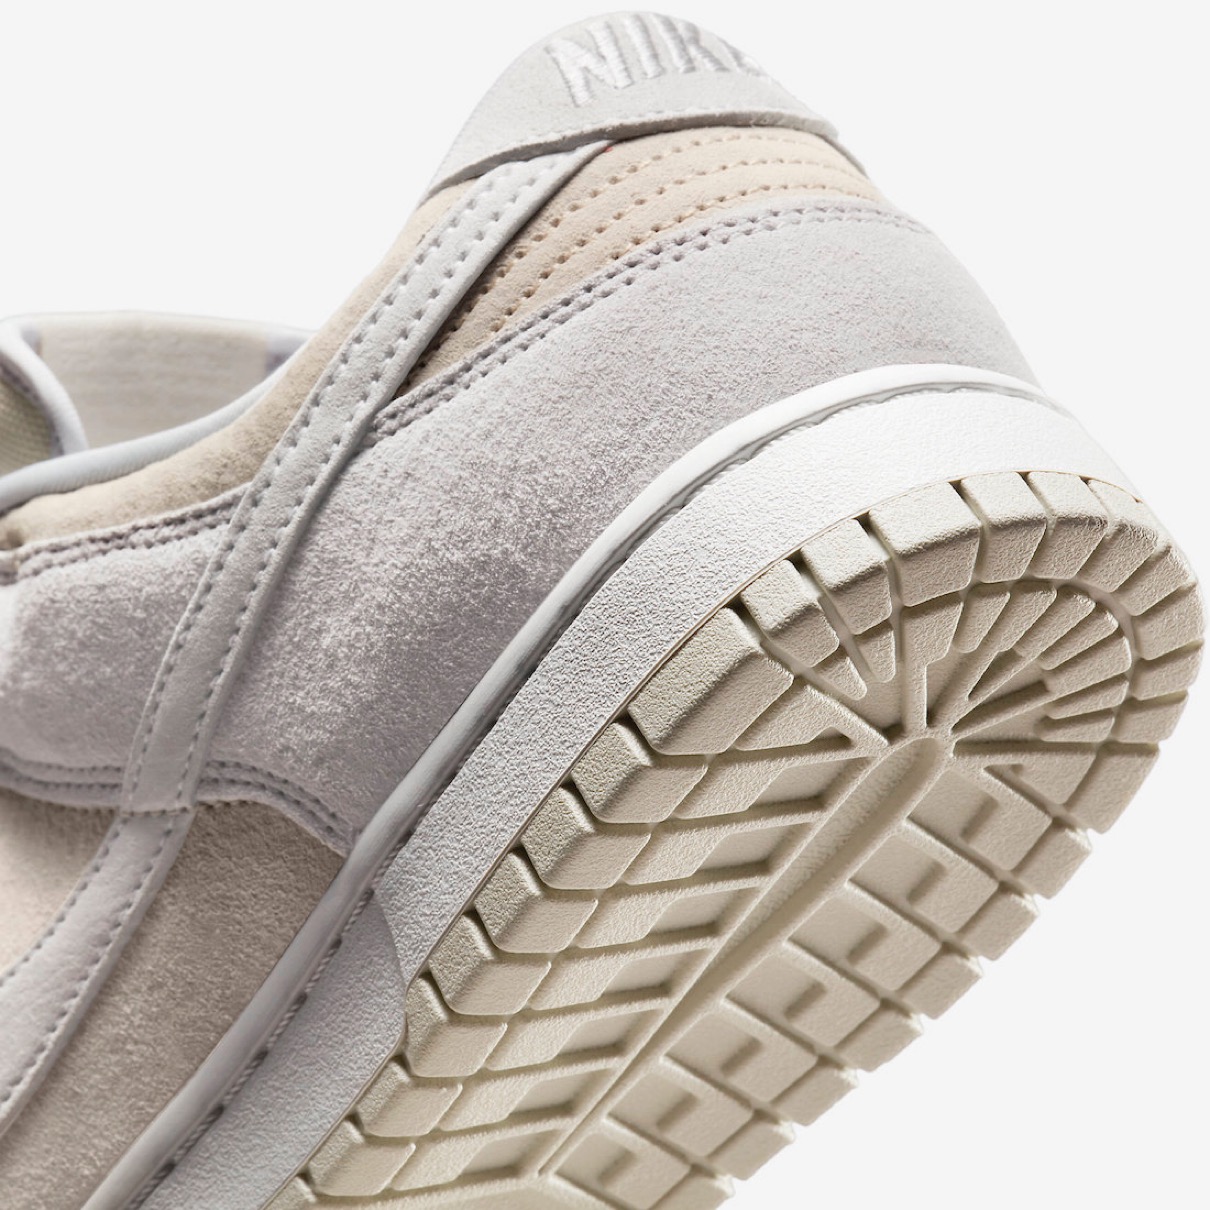 Nike Dunk Low Retro PRM “Vast Grey”が国内4月10日に発売予定 | UP TO